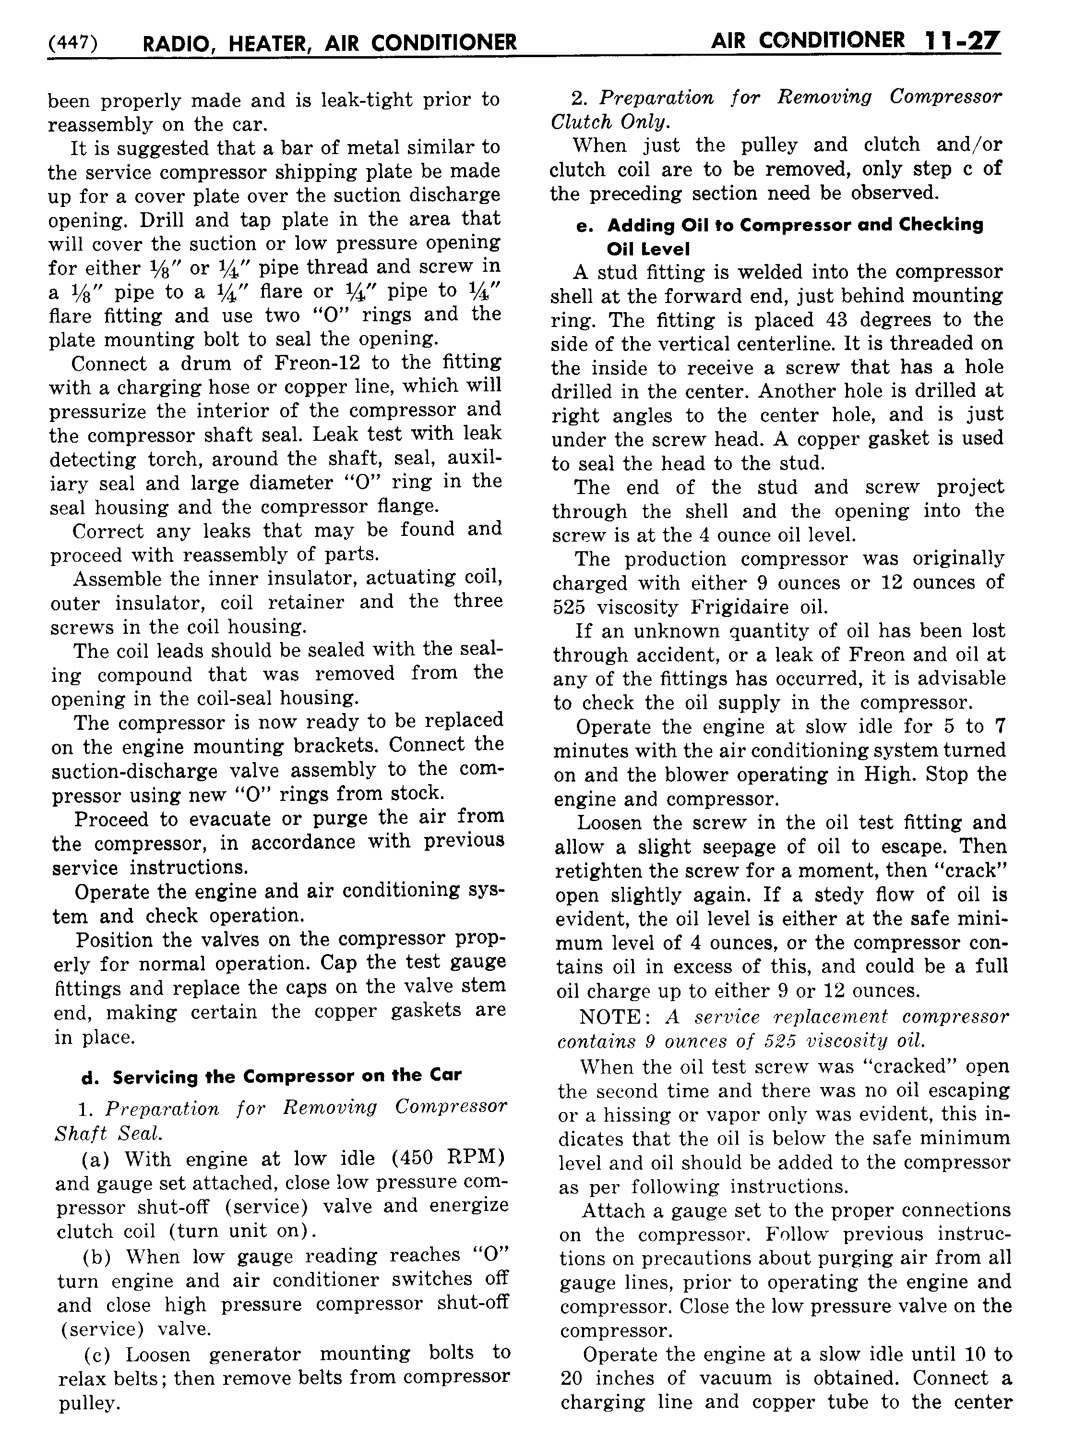 n_12 1956 Buick Shop Manual - Radio-Heater-AC-027-027.jpg